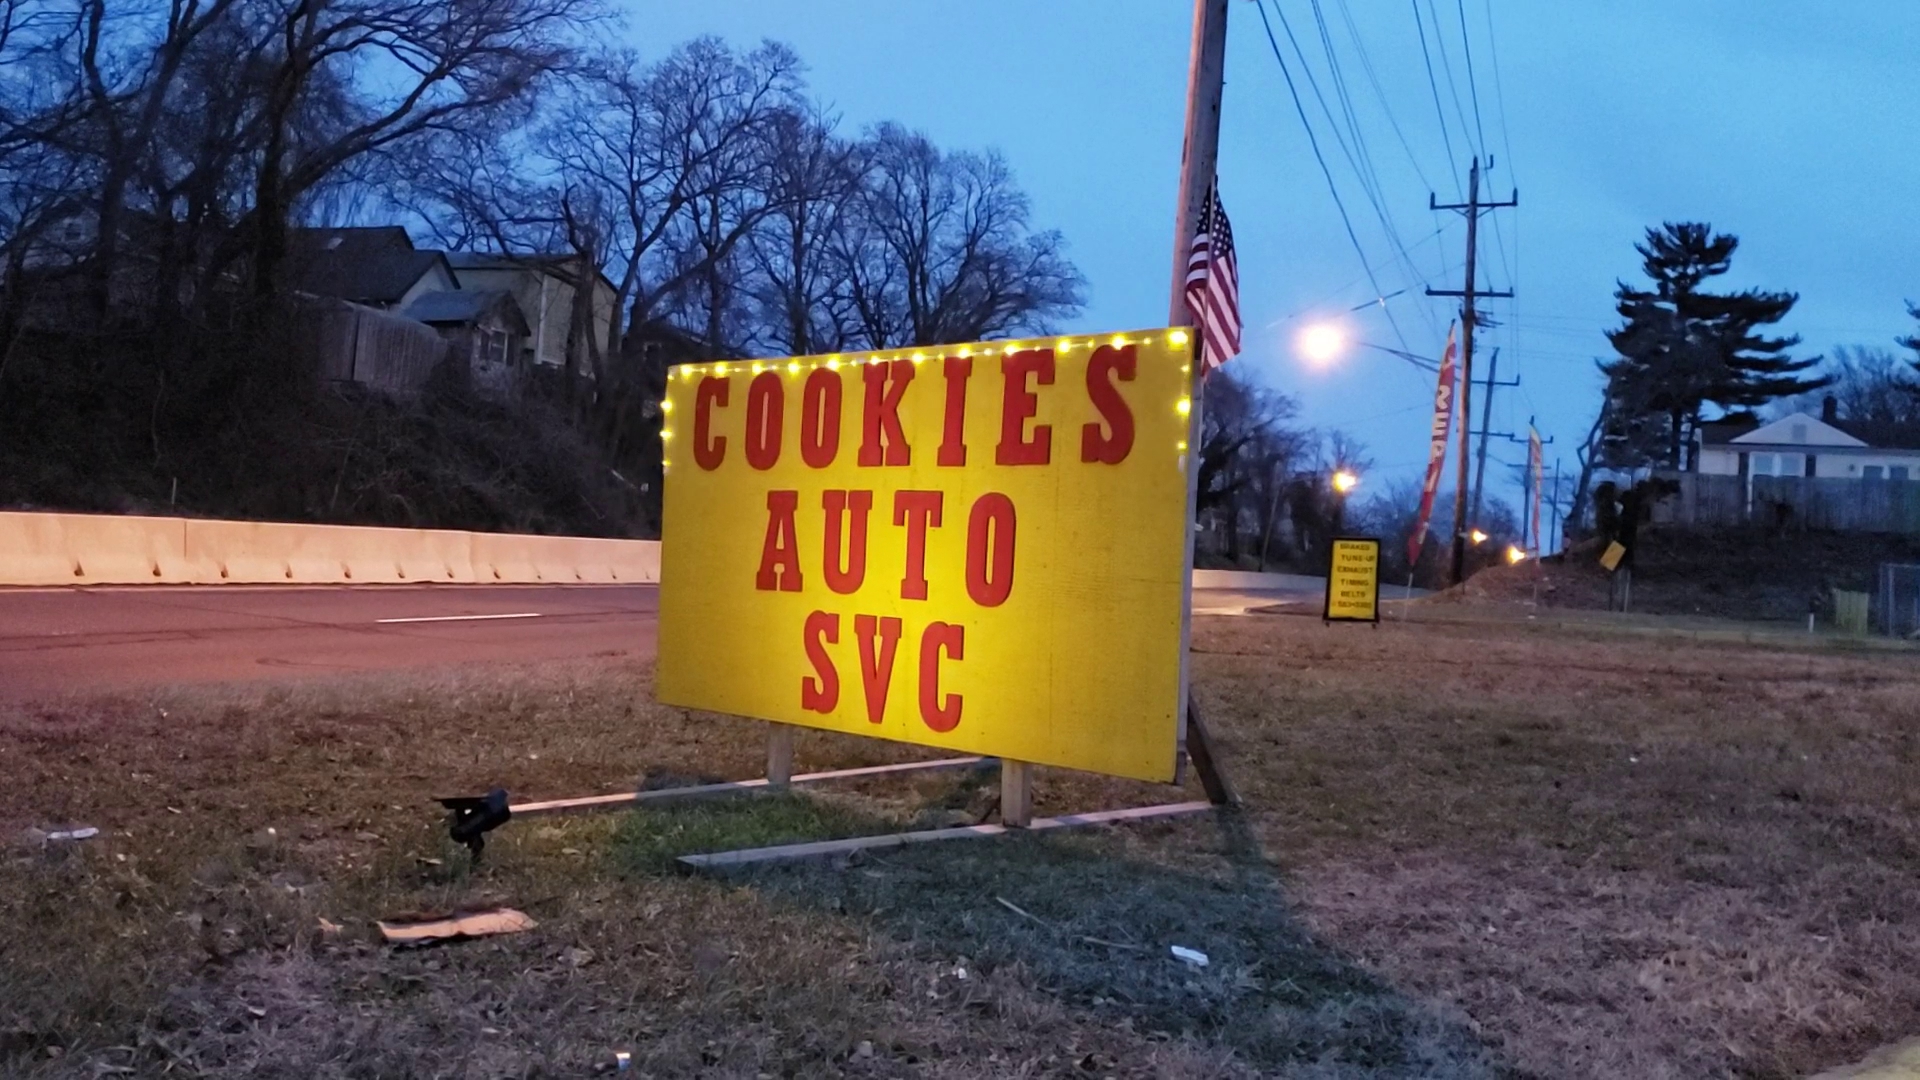 Cookie's Auto Services